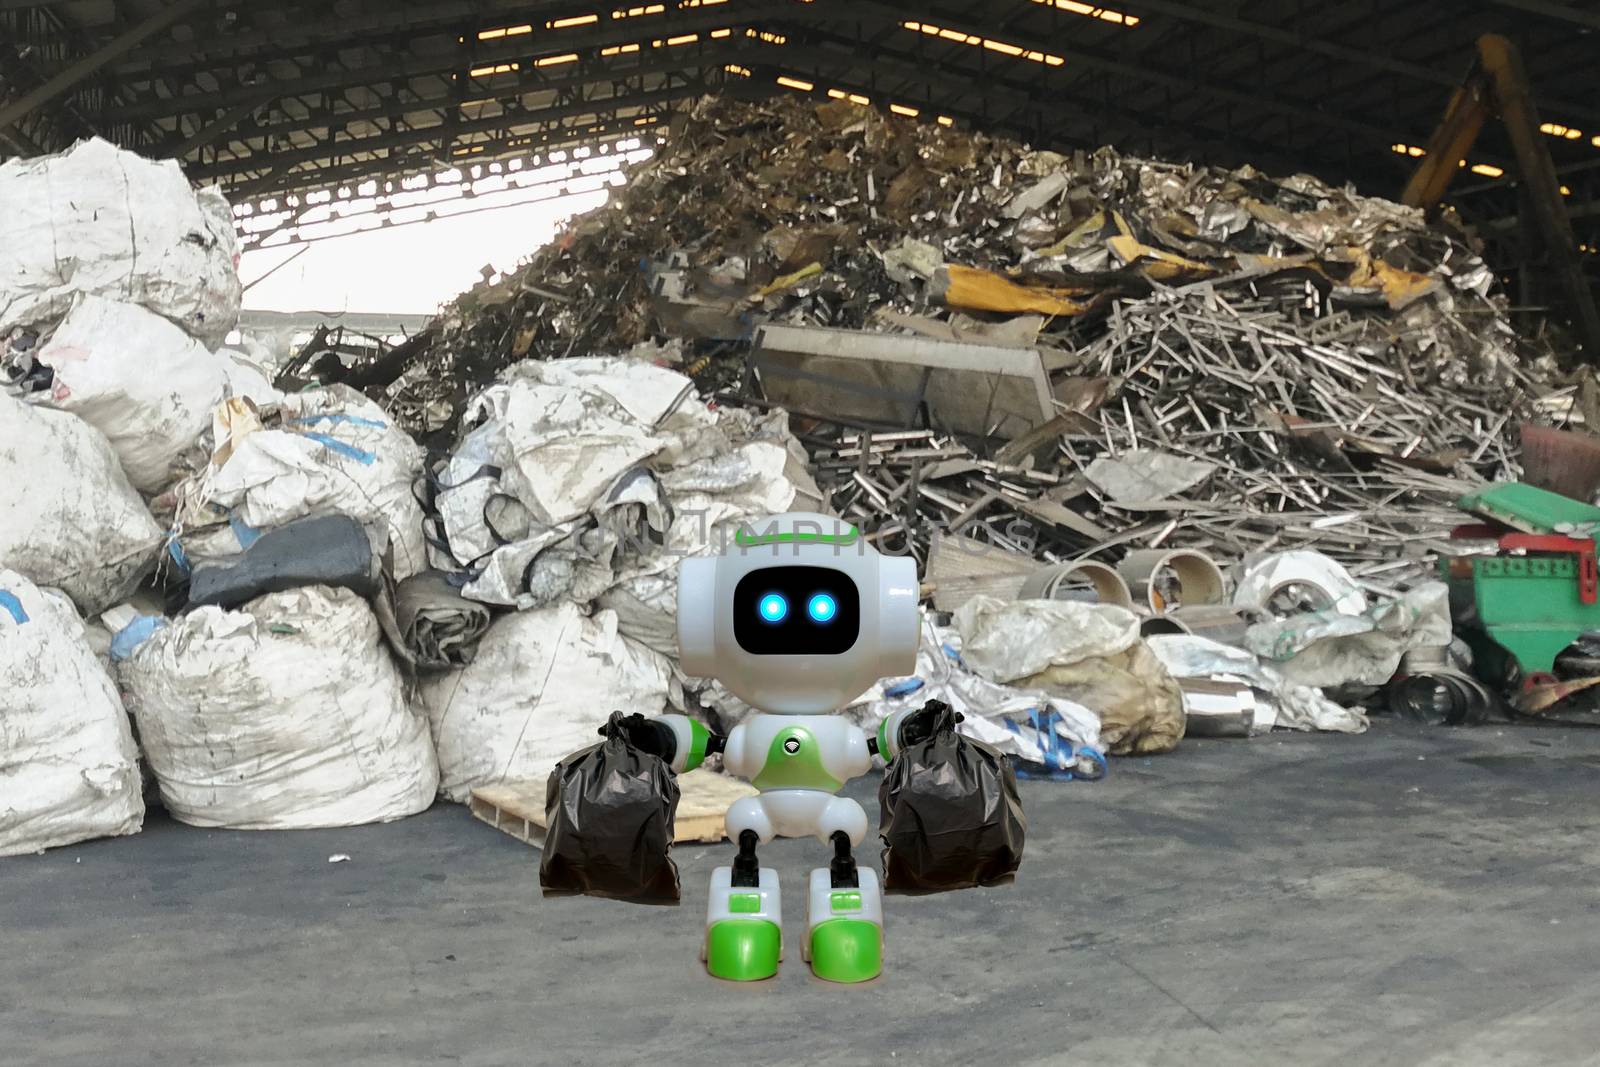 Robot technology to bin black garbage bag instead of humans